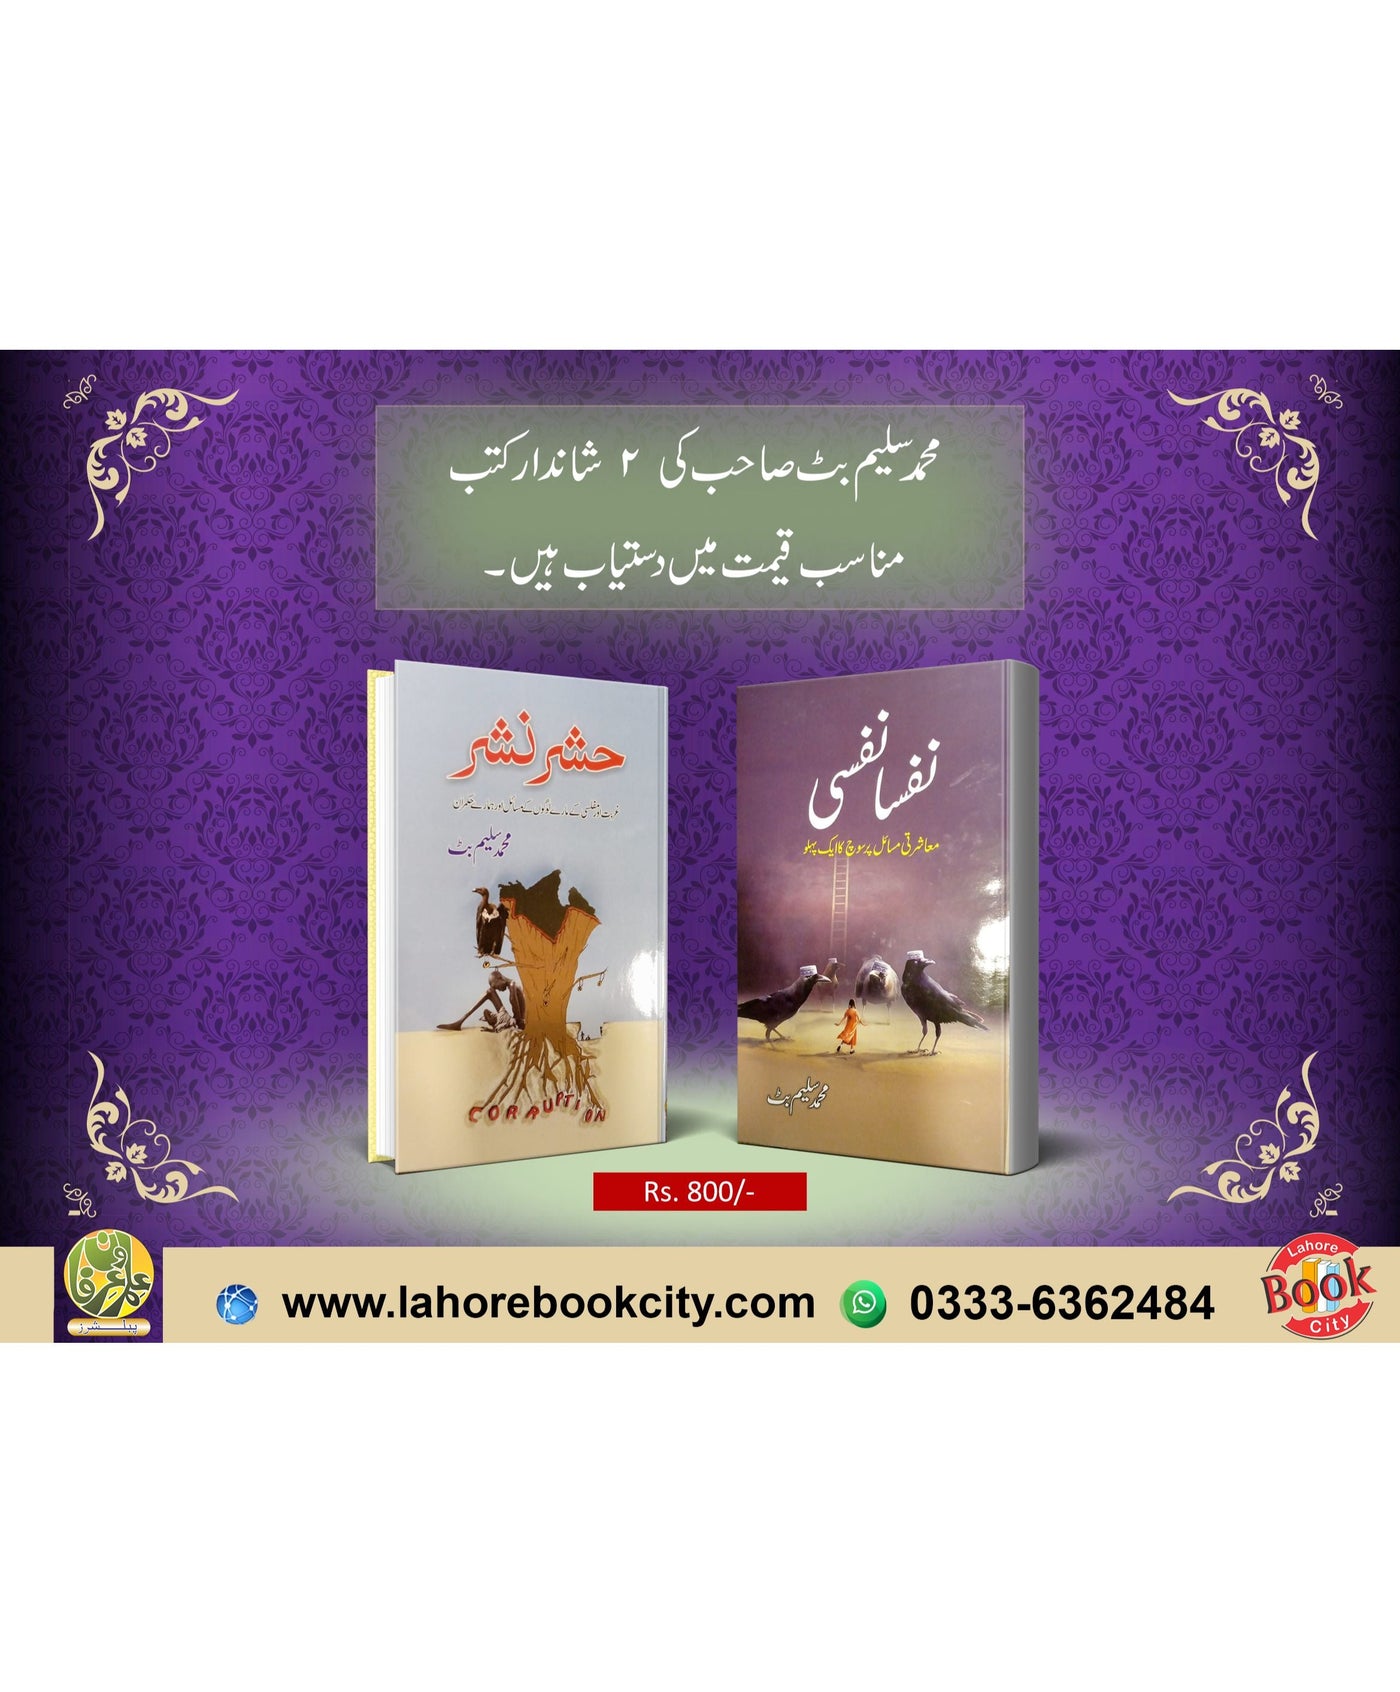 saleem but 2 books ( nafsa nafsi + hashar nashar) deal set